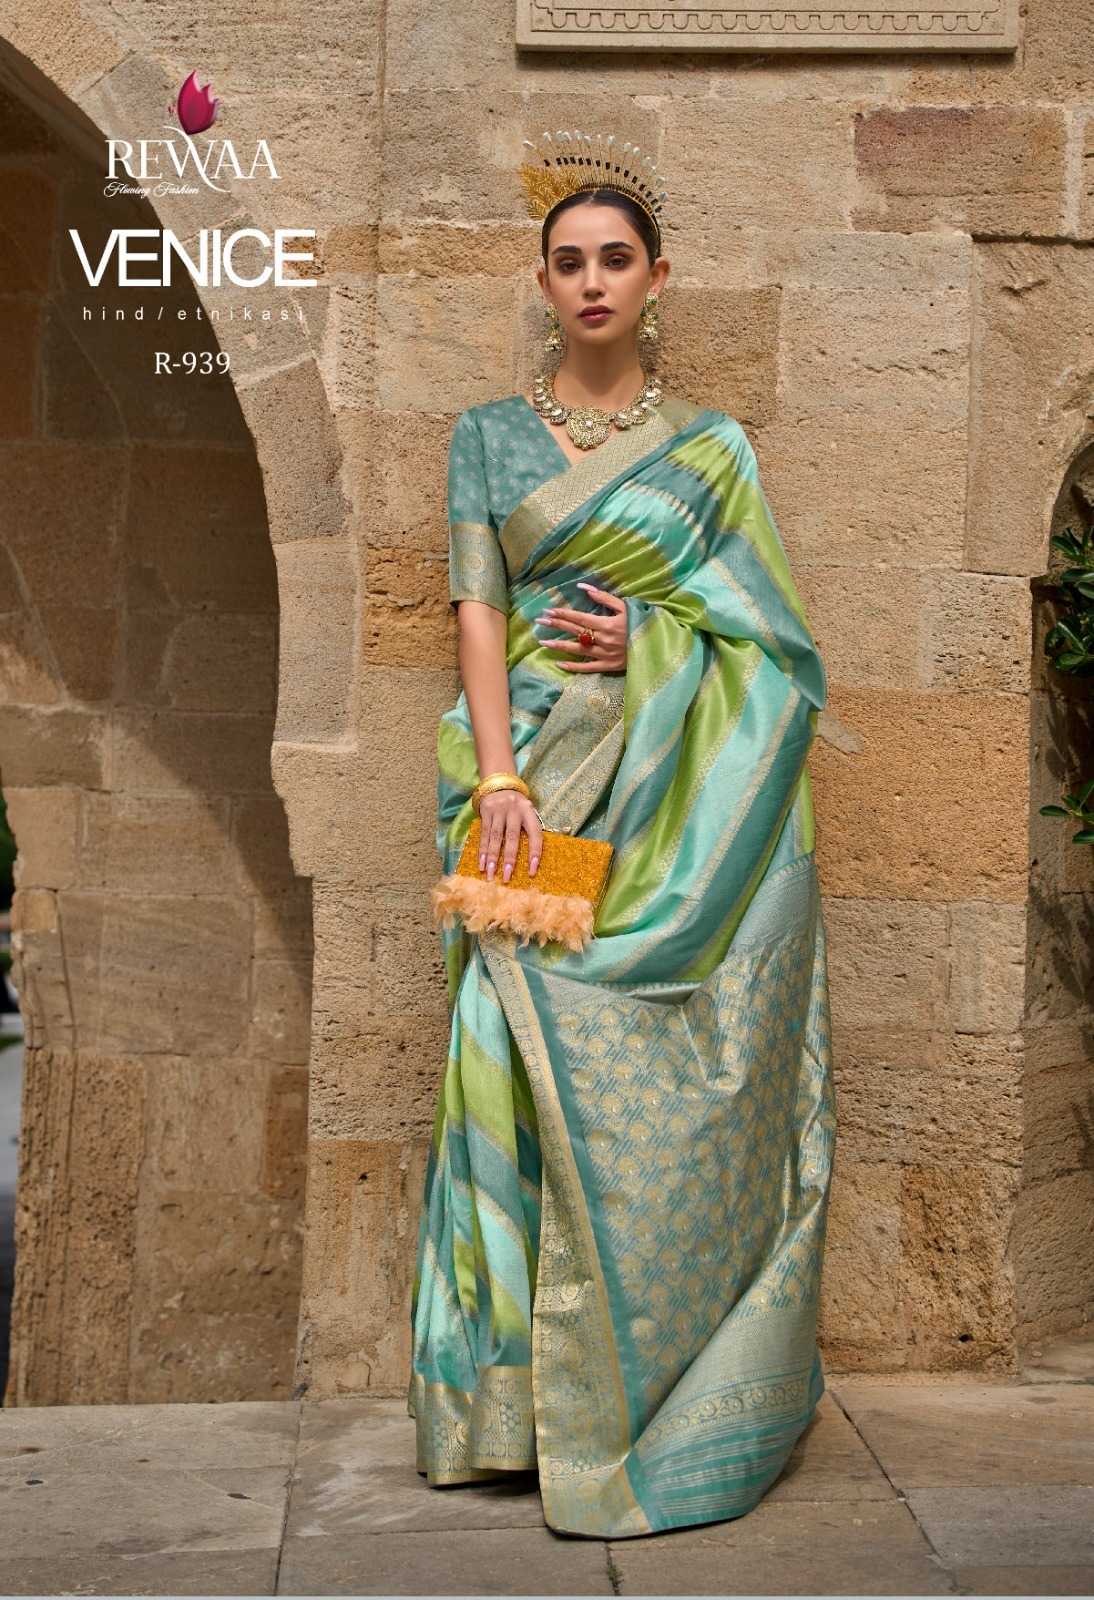 rewaa present venice 930-939 party wear sarees new catalog 